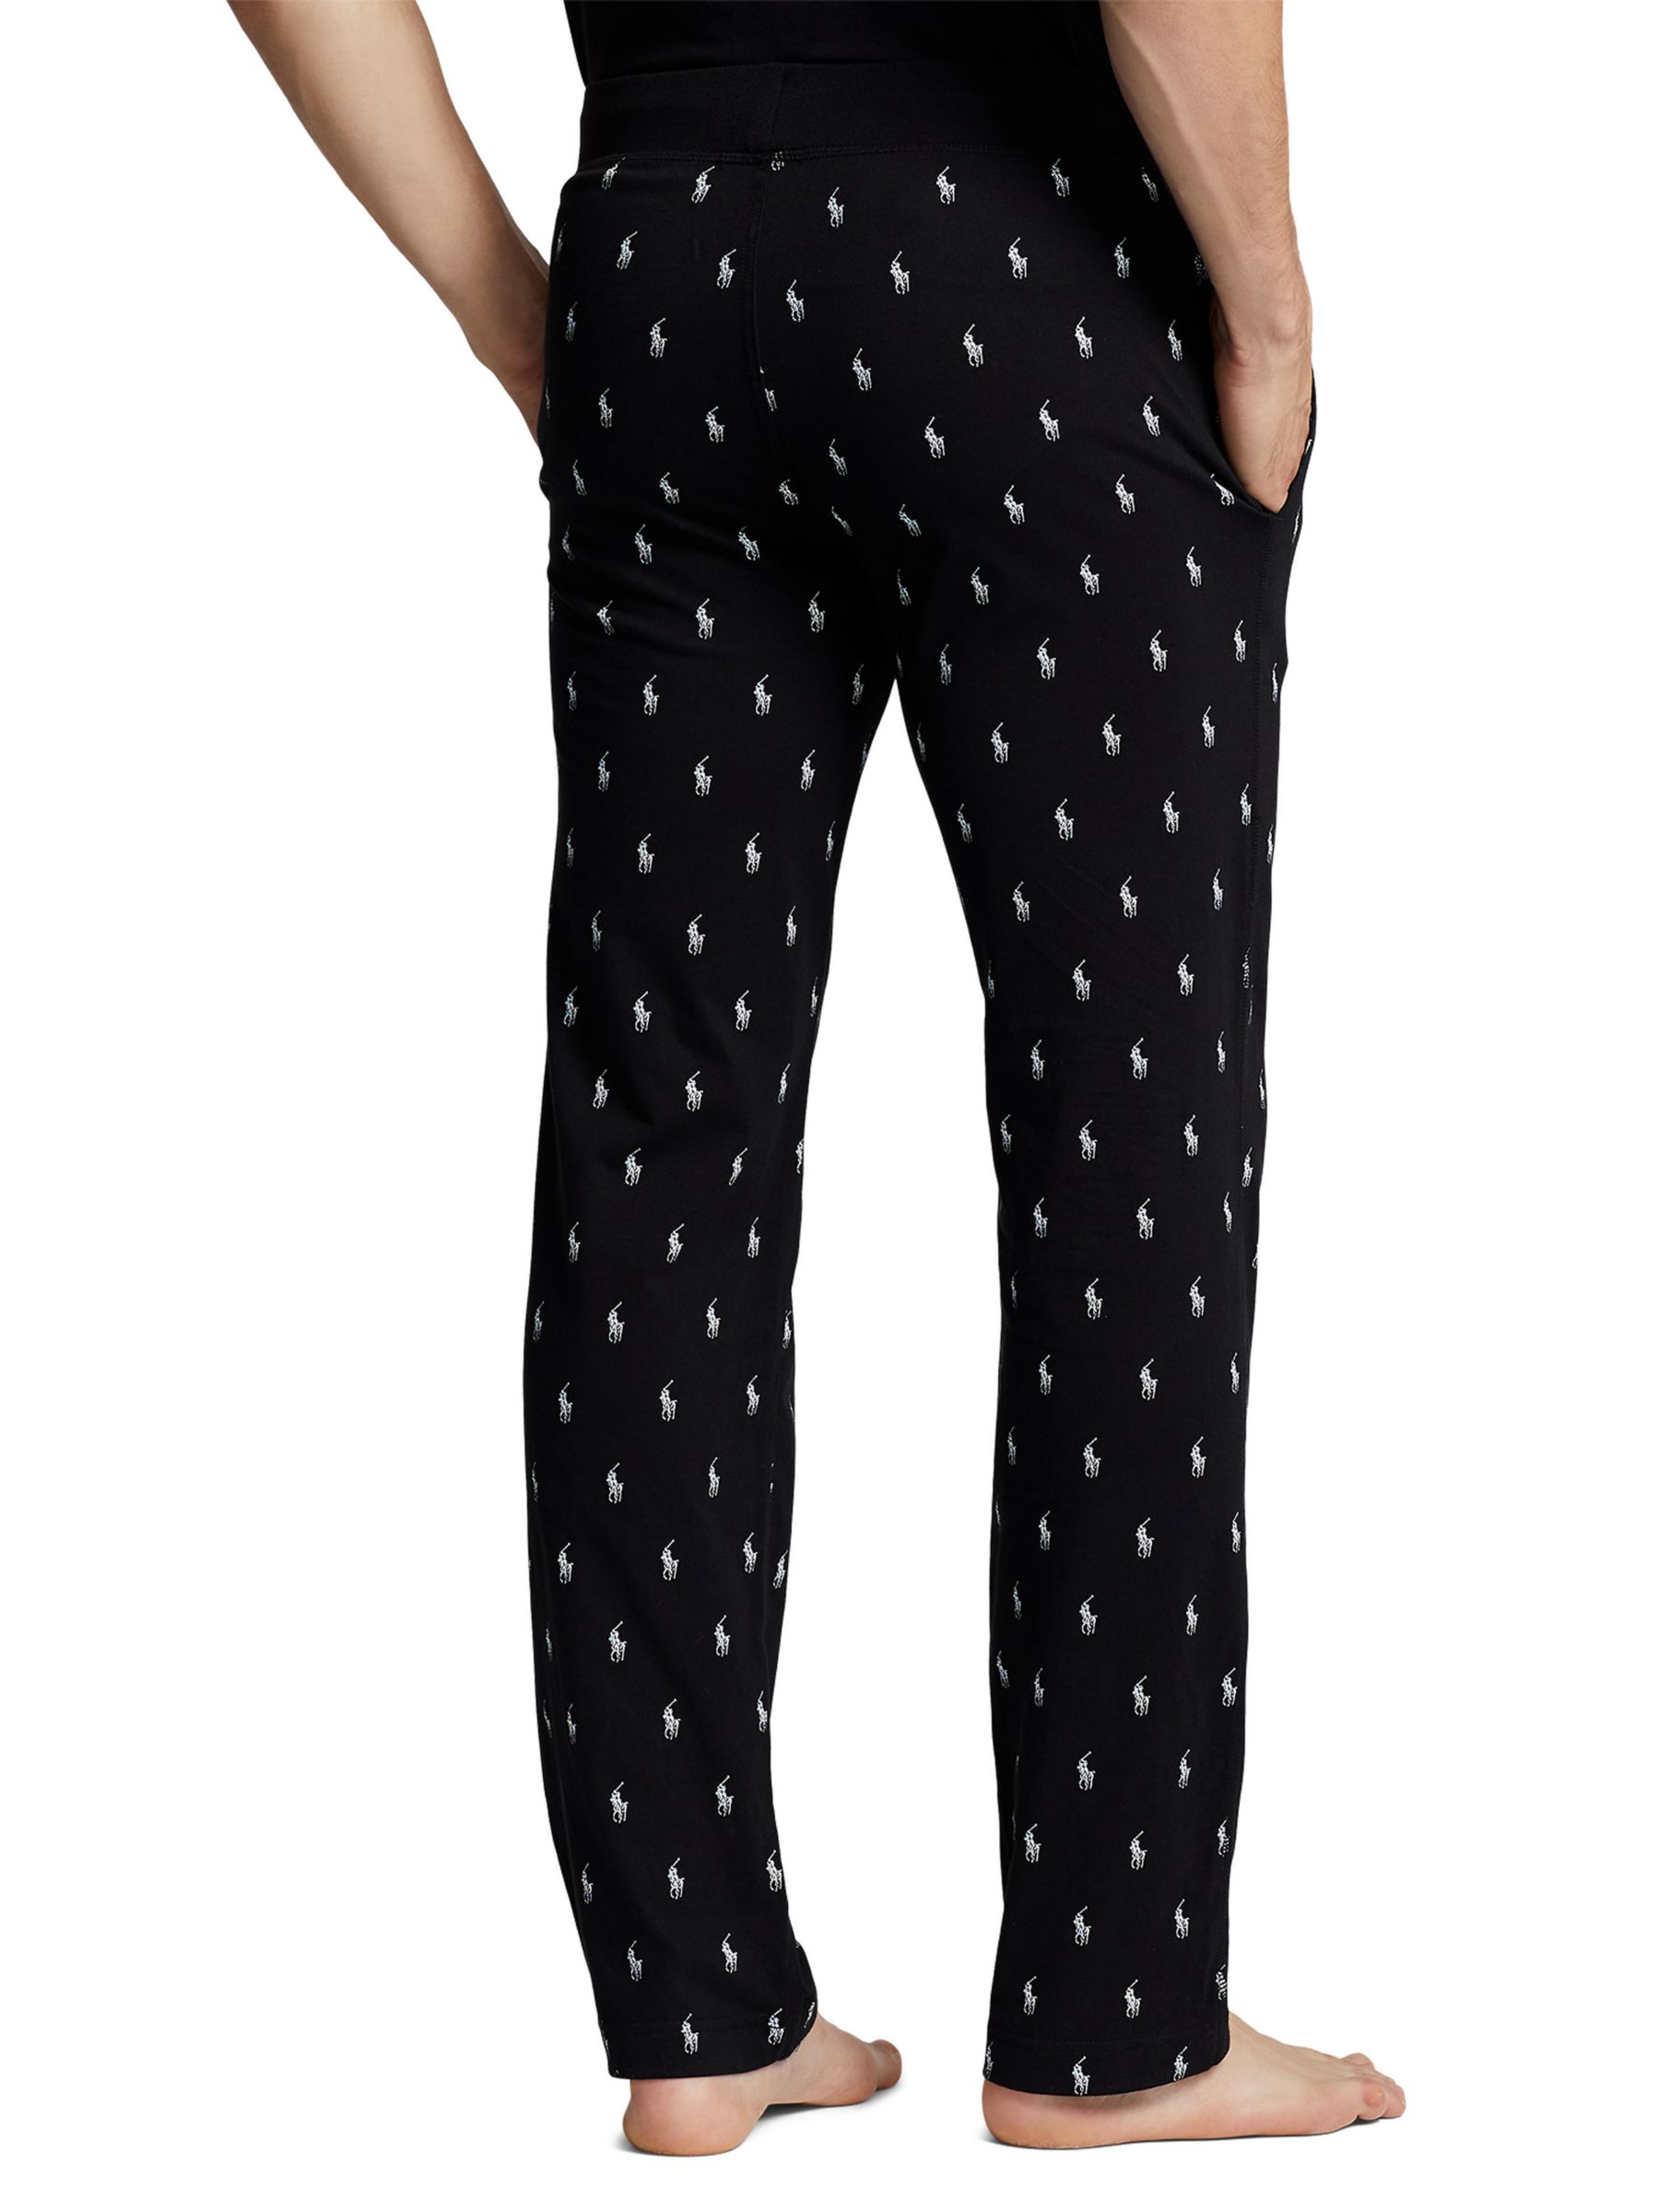 Ralph Lauren Signature Pony Jersey Lounge Pants, Black/White, XL